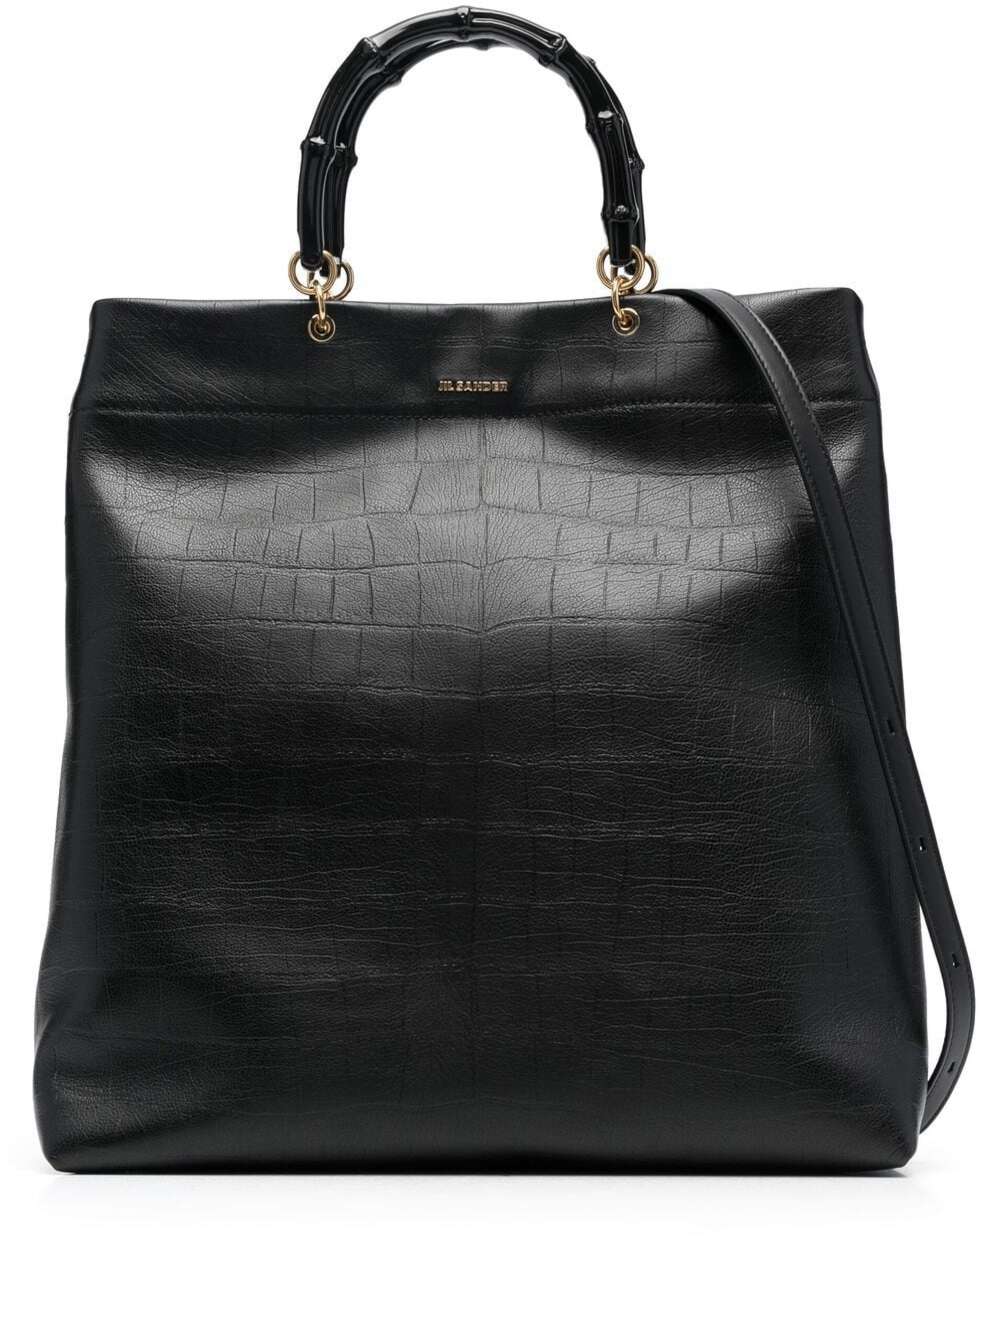 Jil Sander Black Croco Embossed Tote Bag With Bamboo Handles In Leather Woman